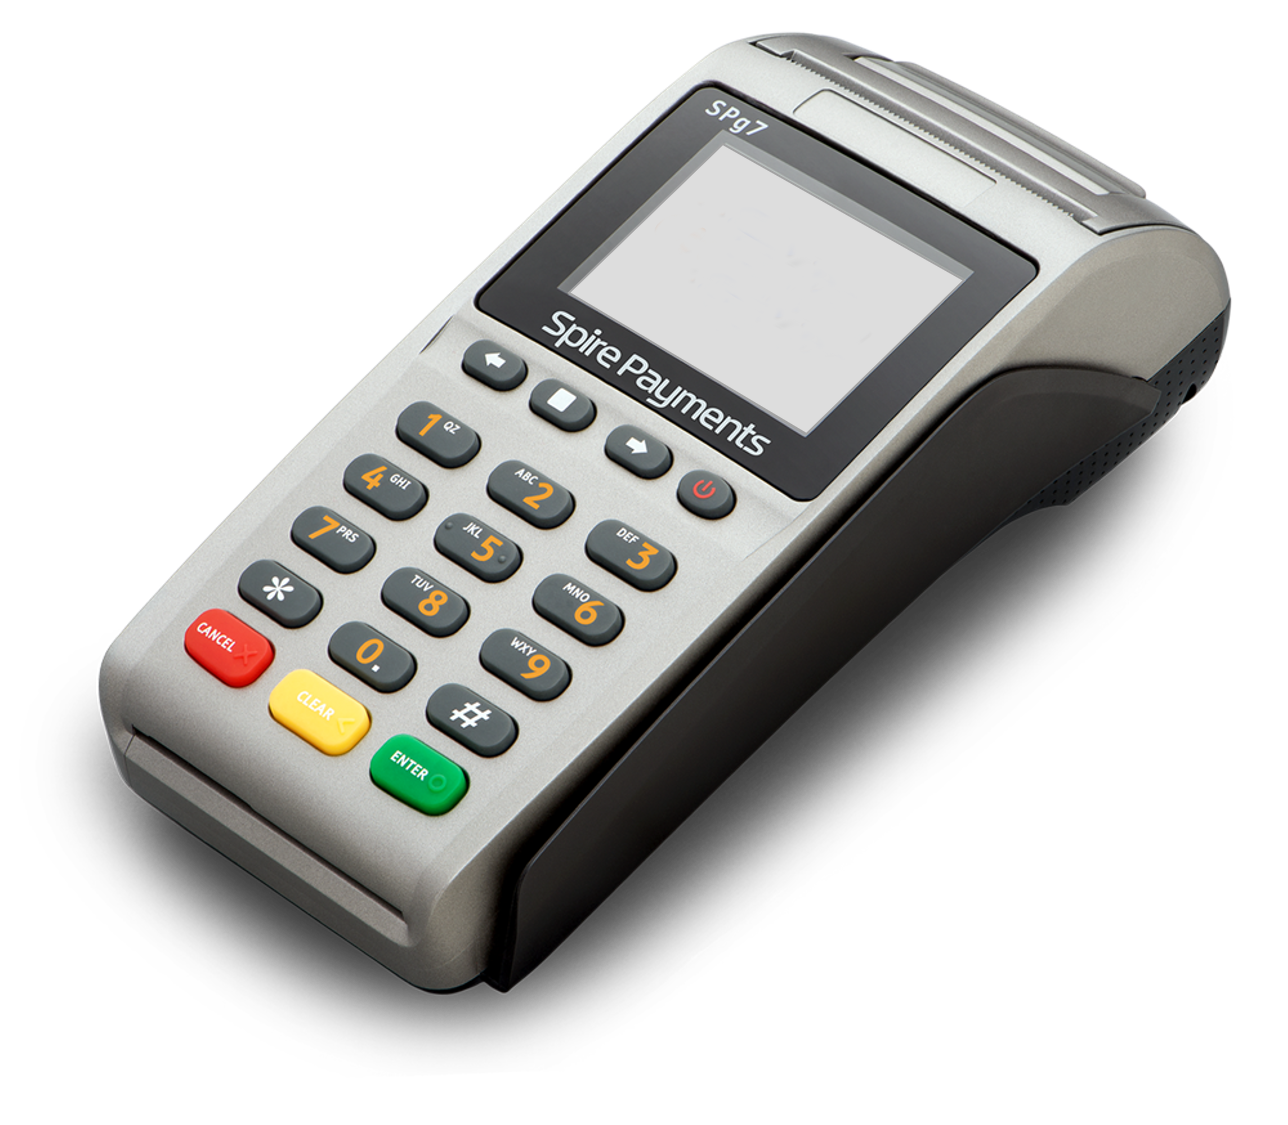 Wireless card payment terminal